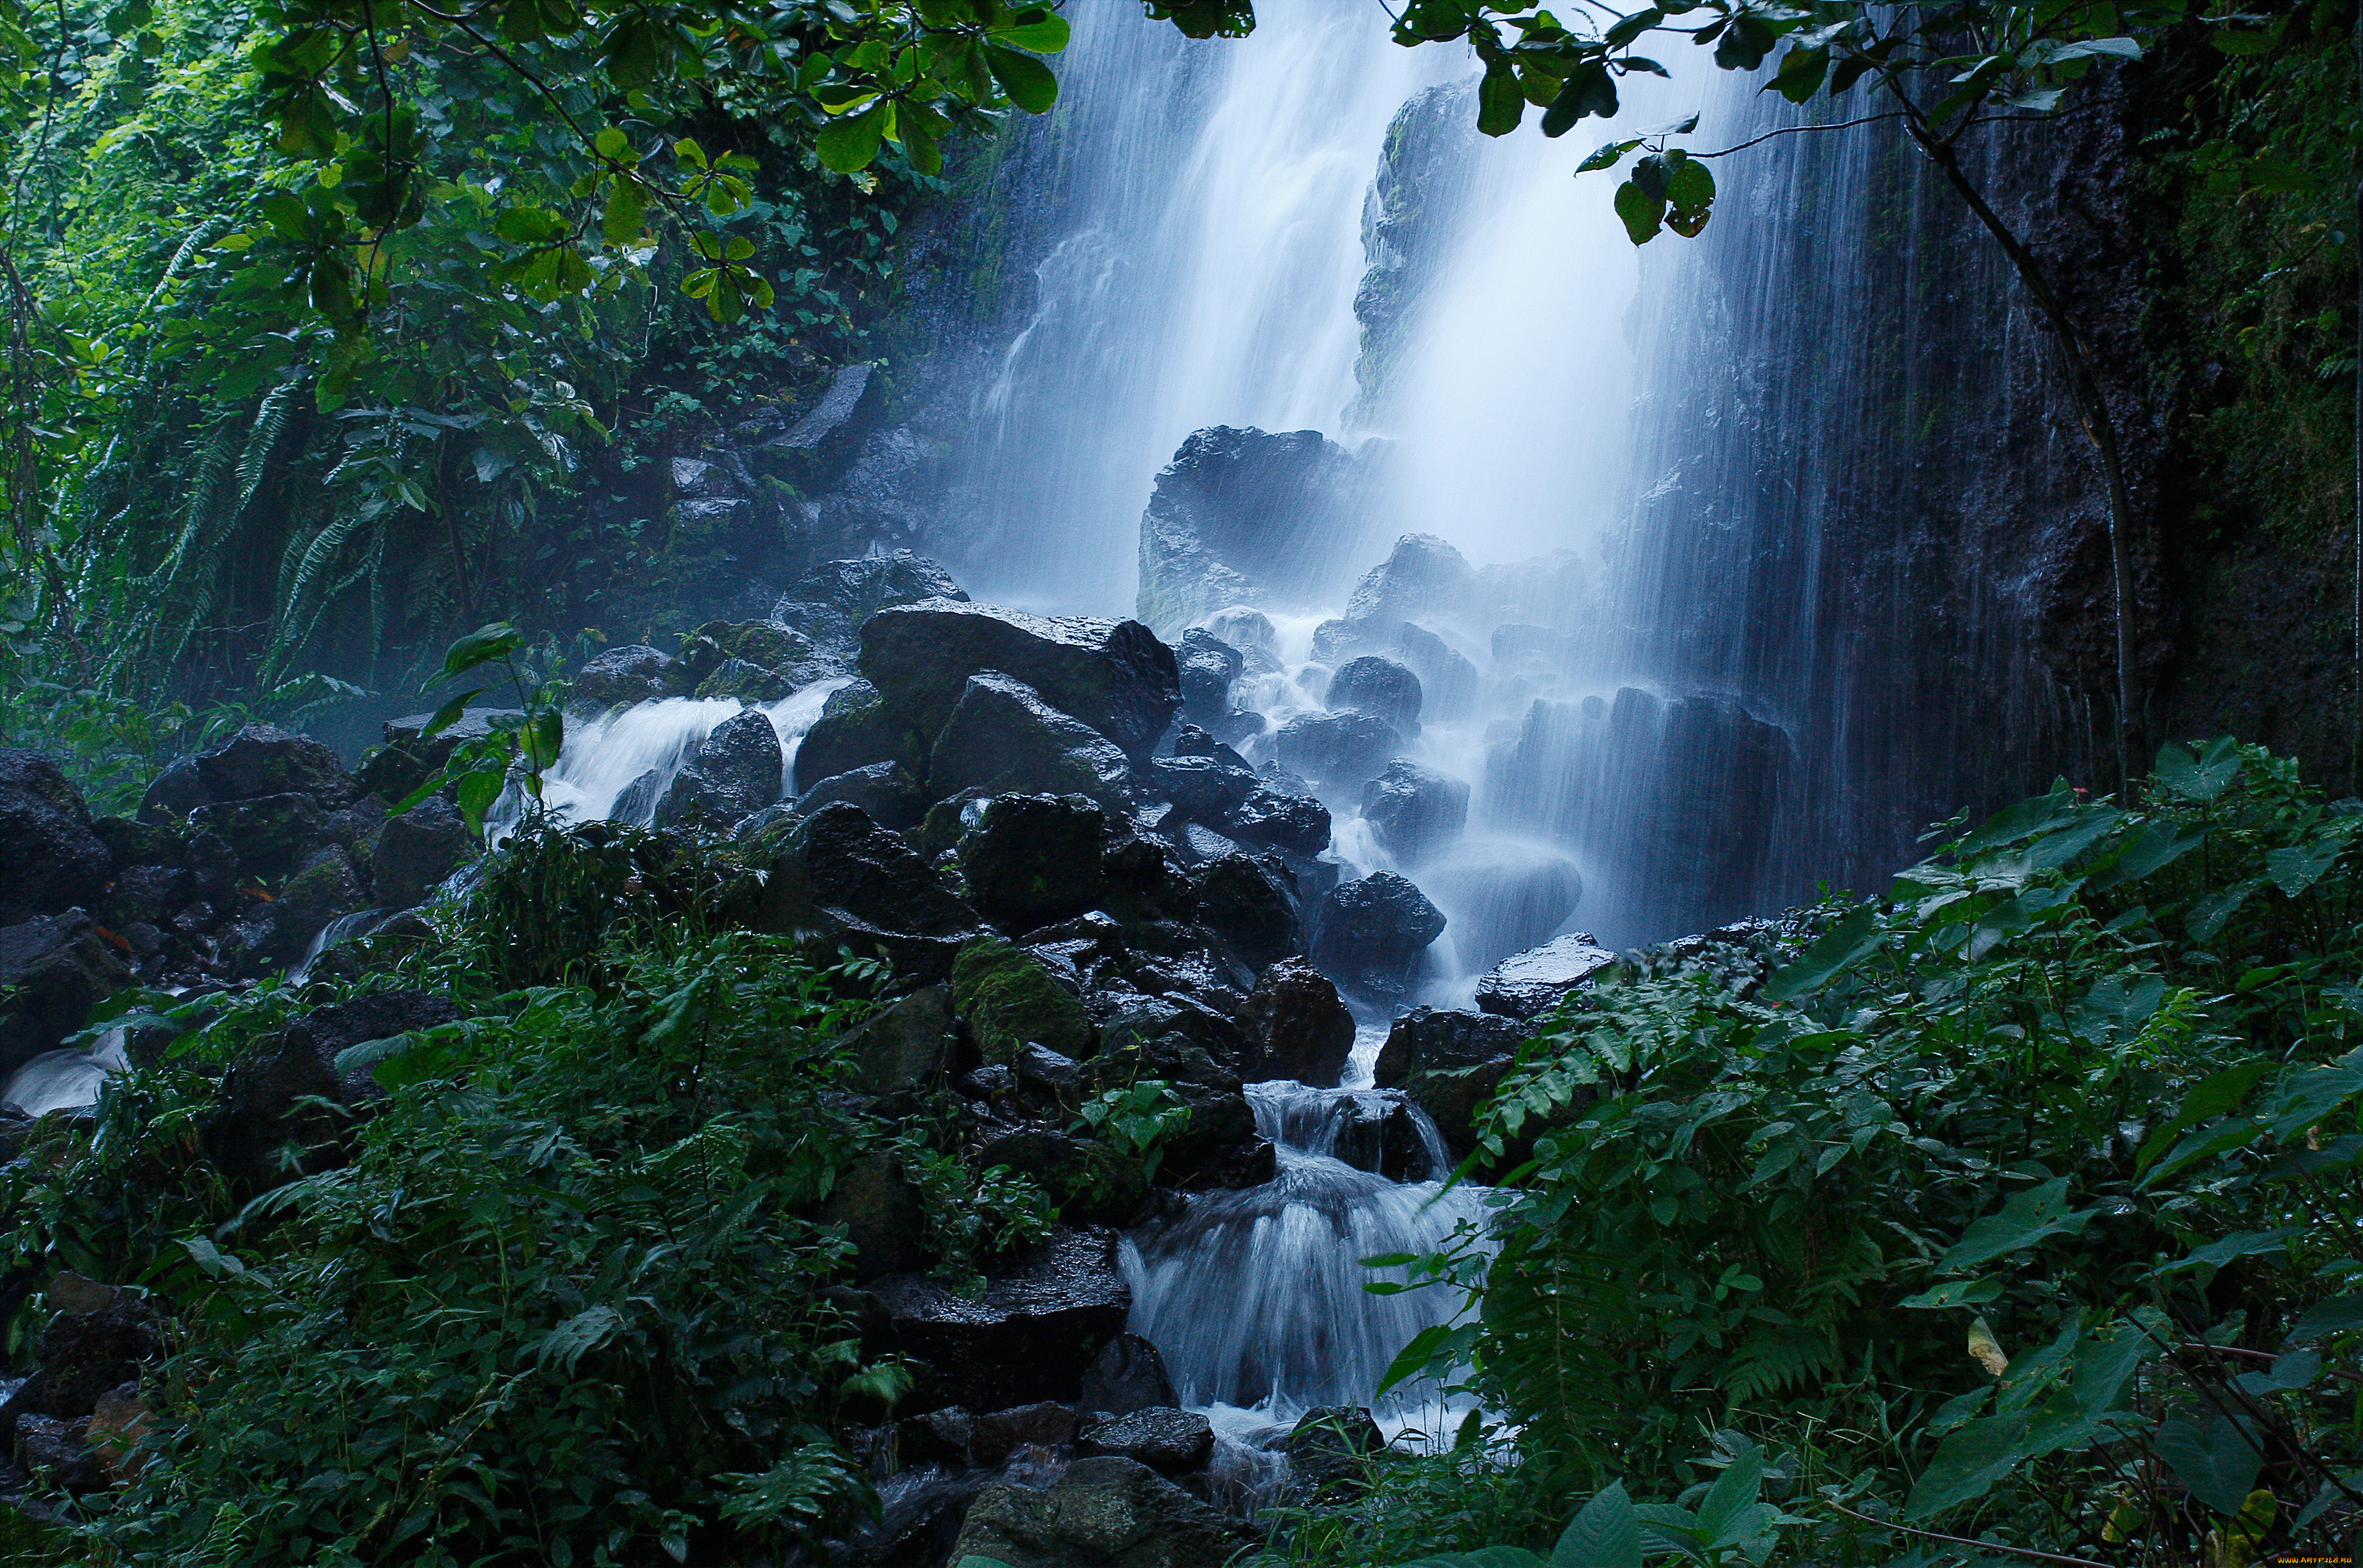 Обои красивые водопады. Водопад Мосбрей. Природа водопад. Лесной водопад. Живая природа водопады.